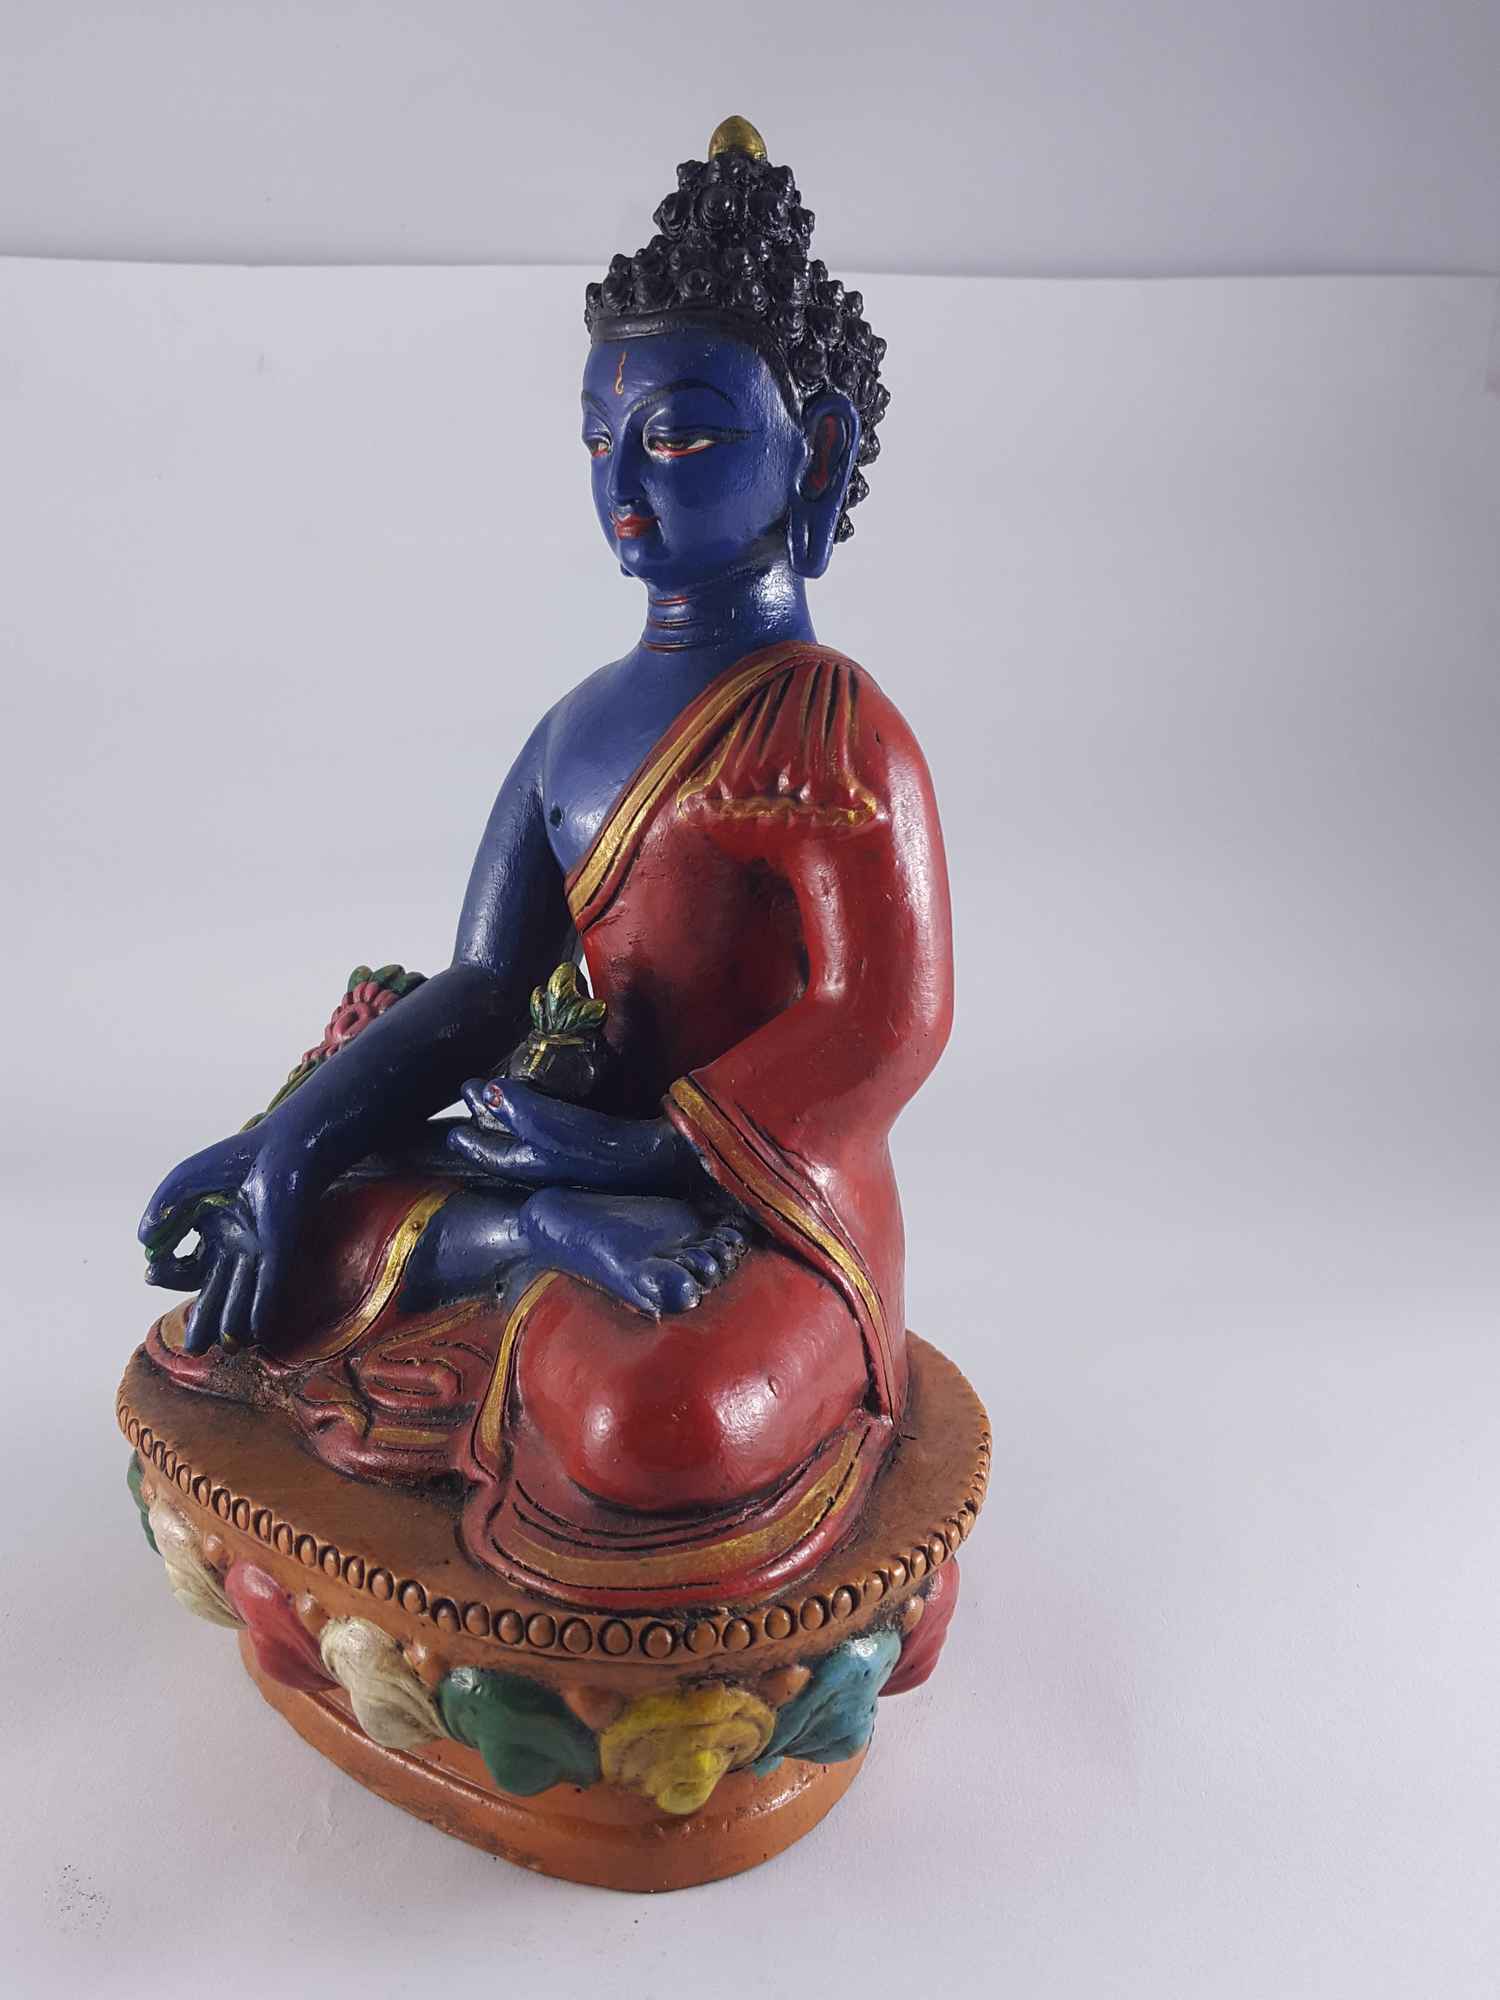 Clay Statue Of Medicine Buddha made In Nepal, handmade, painted